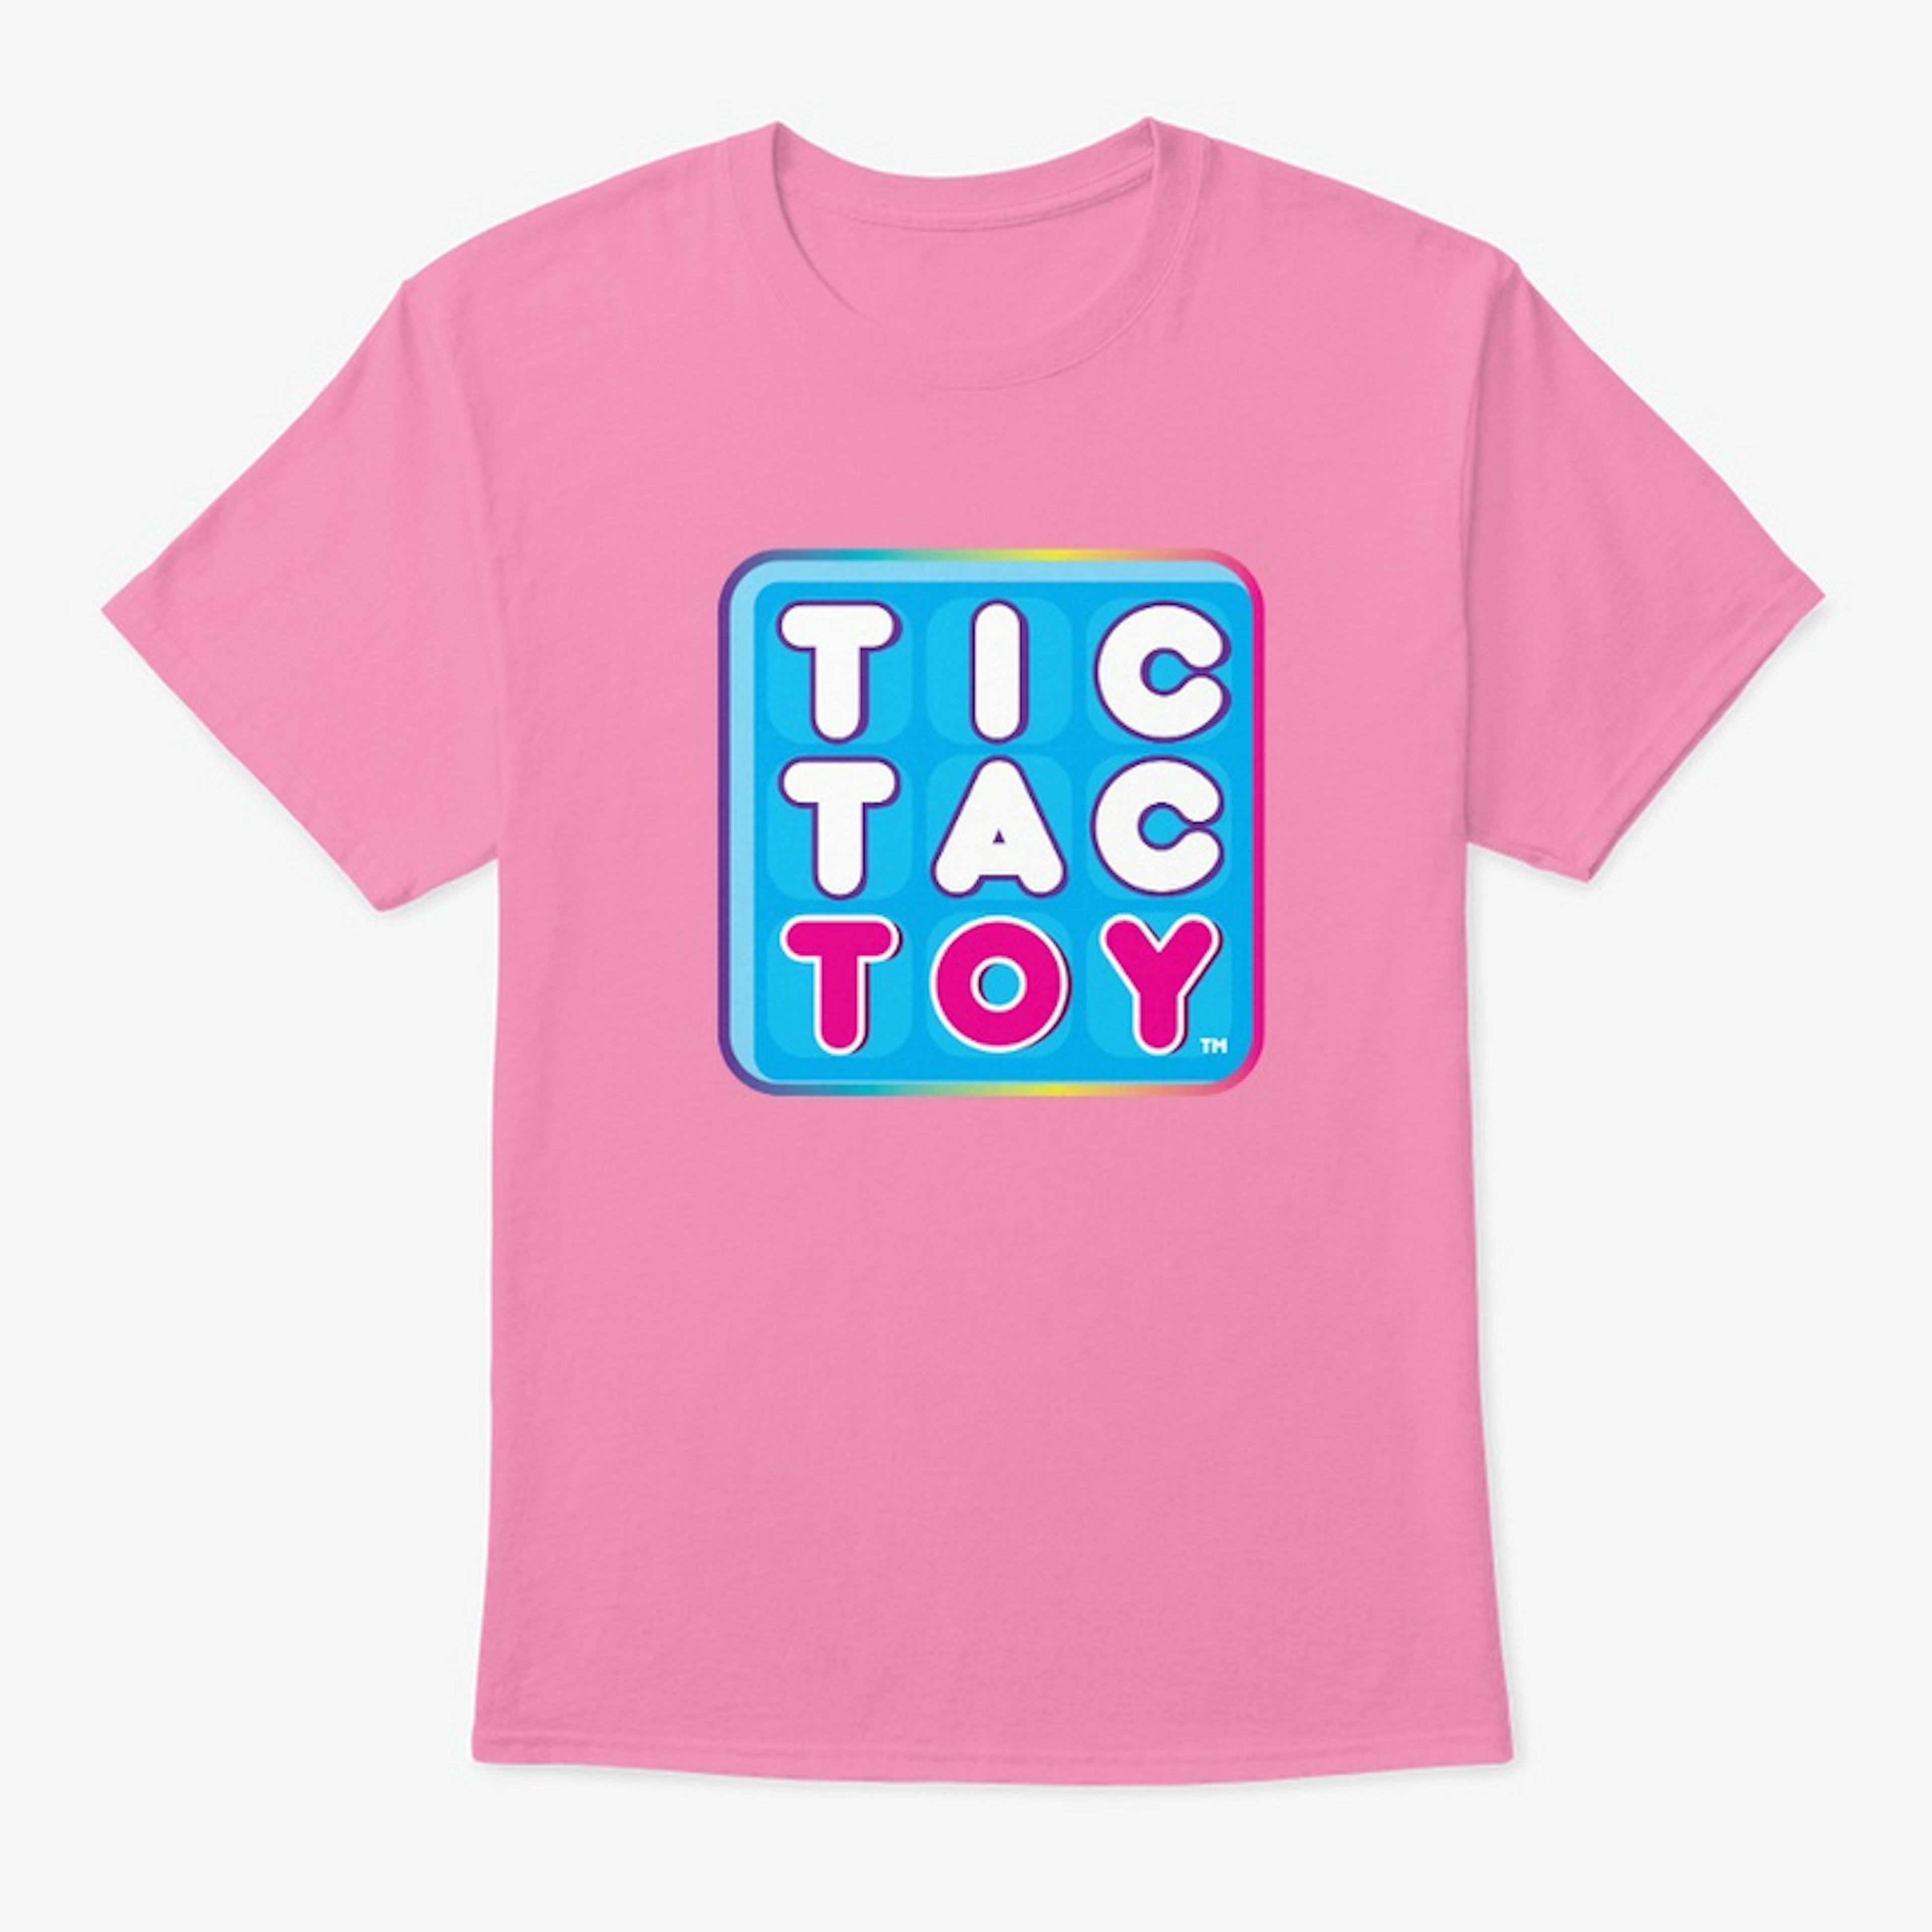 Tic Tac Toy Shirt (Adult Sizes)